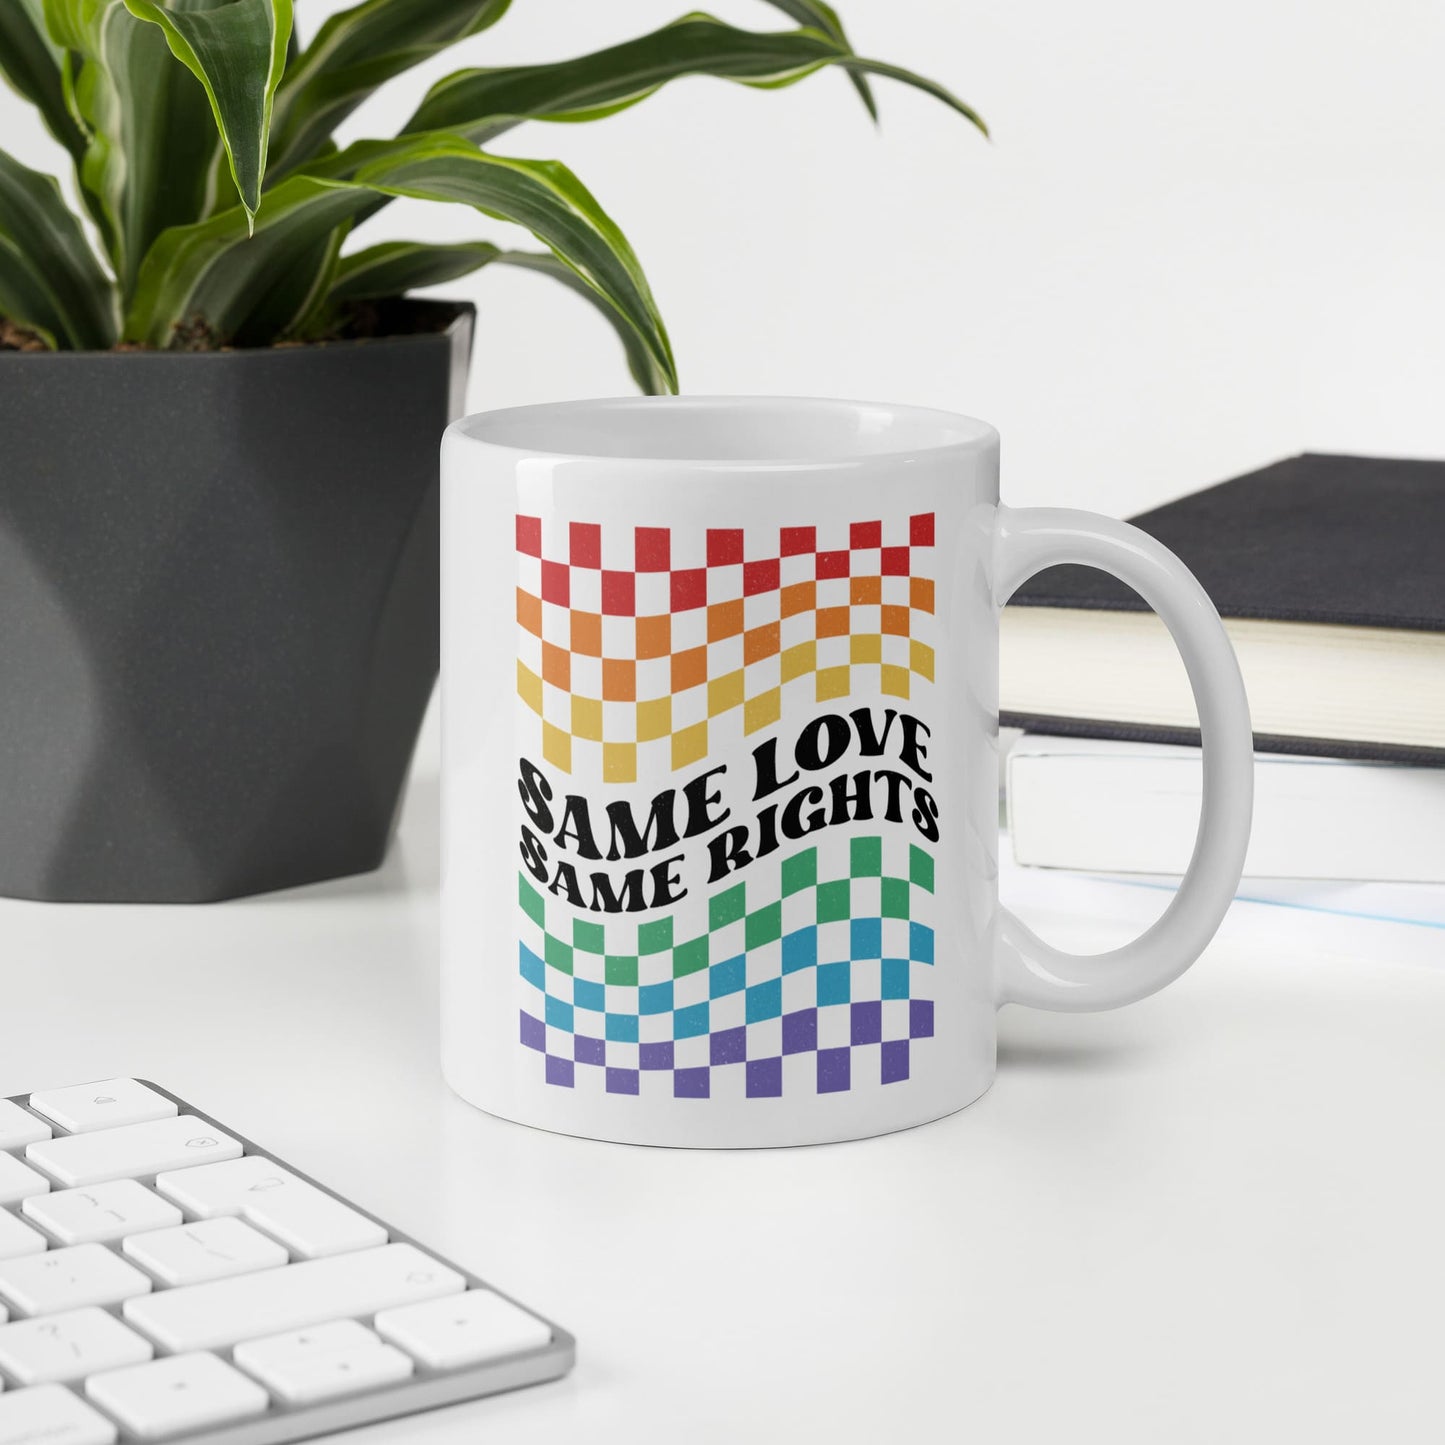 LGBTQ mug, same love same rights pride coffee or tea cup on desk